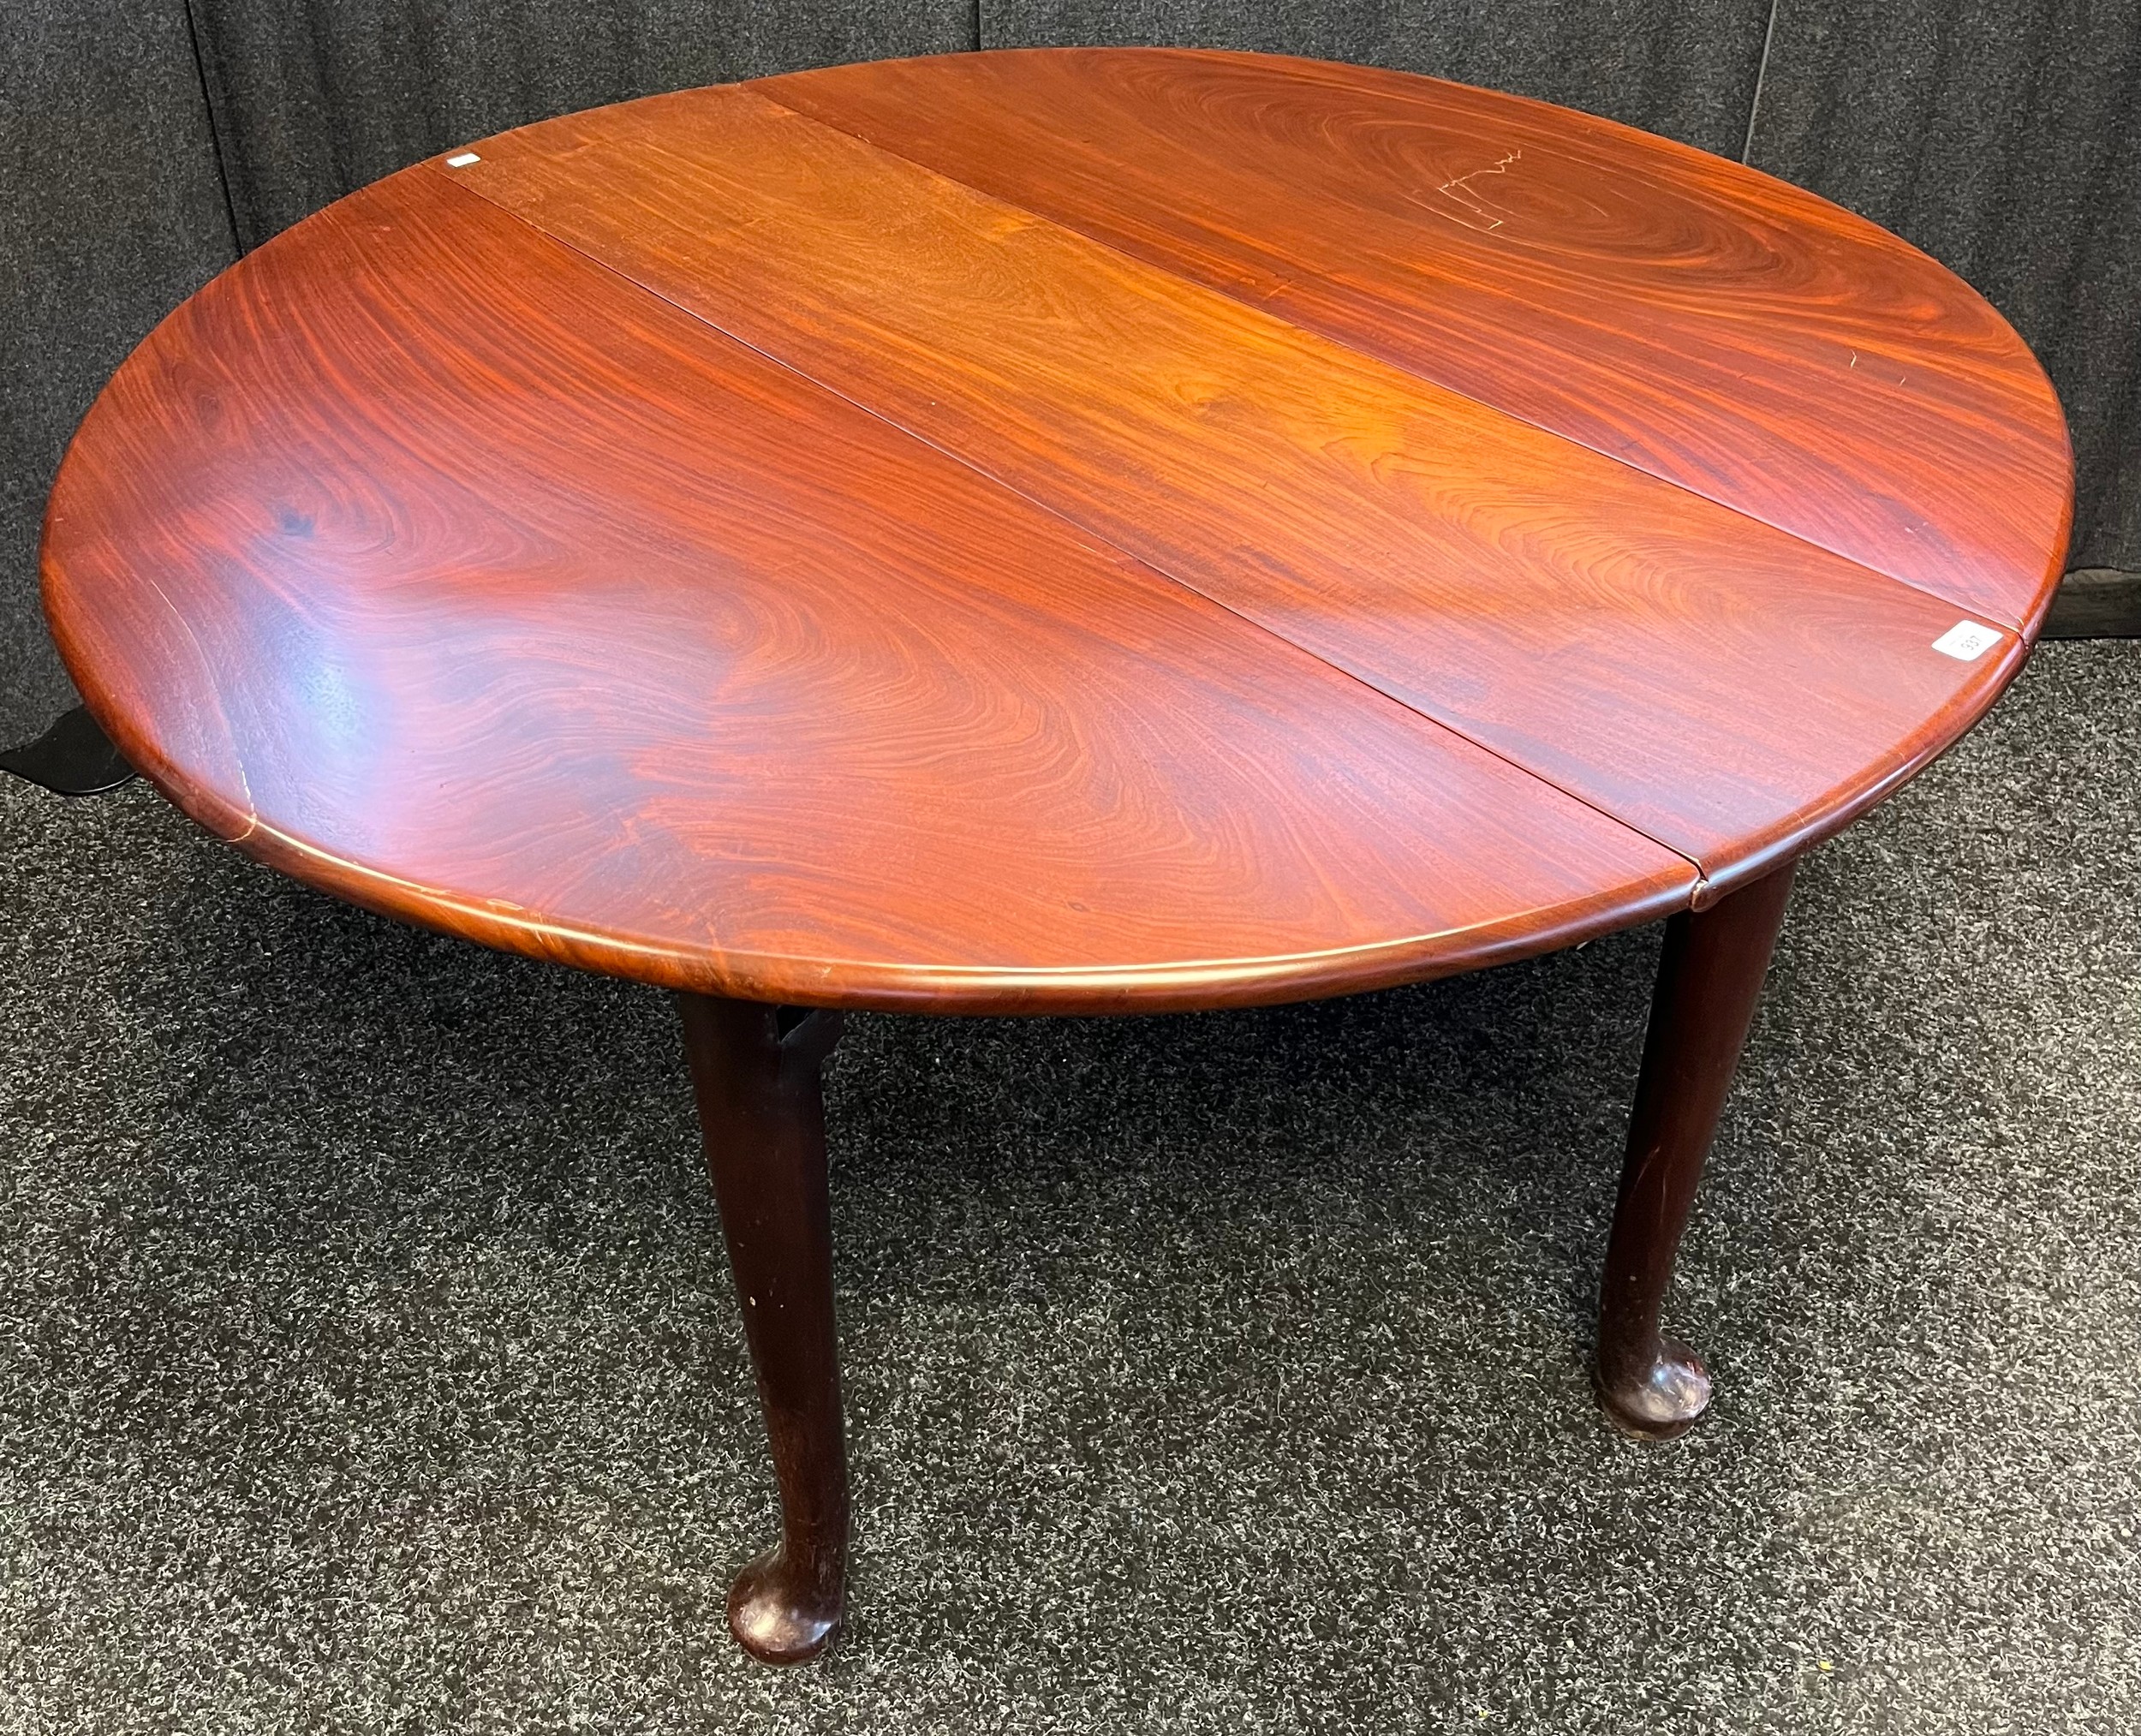 19th century mahogany drop end table raised on turned legs ending in pad feet [71x130x122cm]